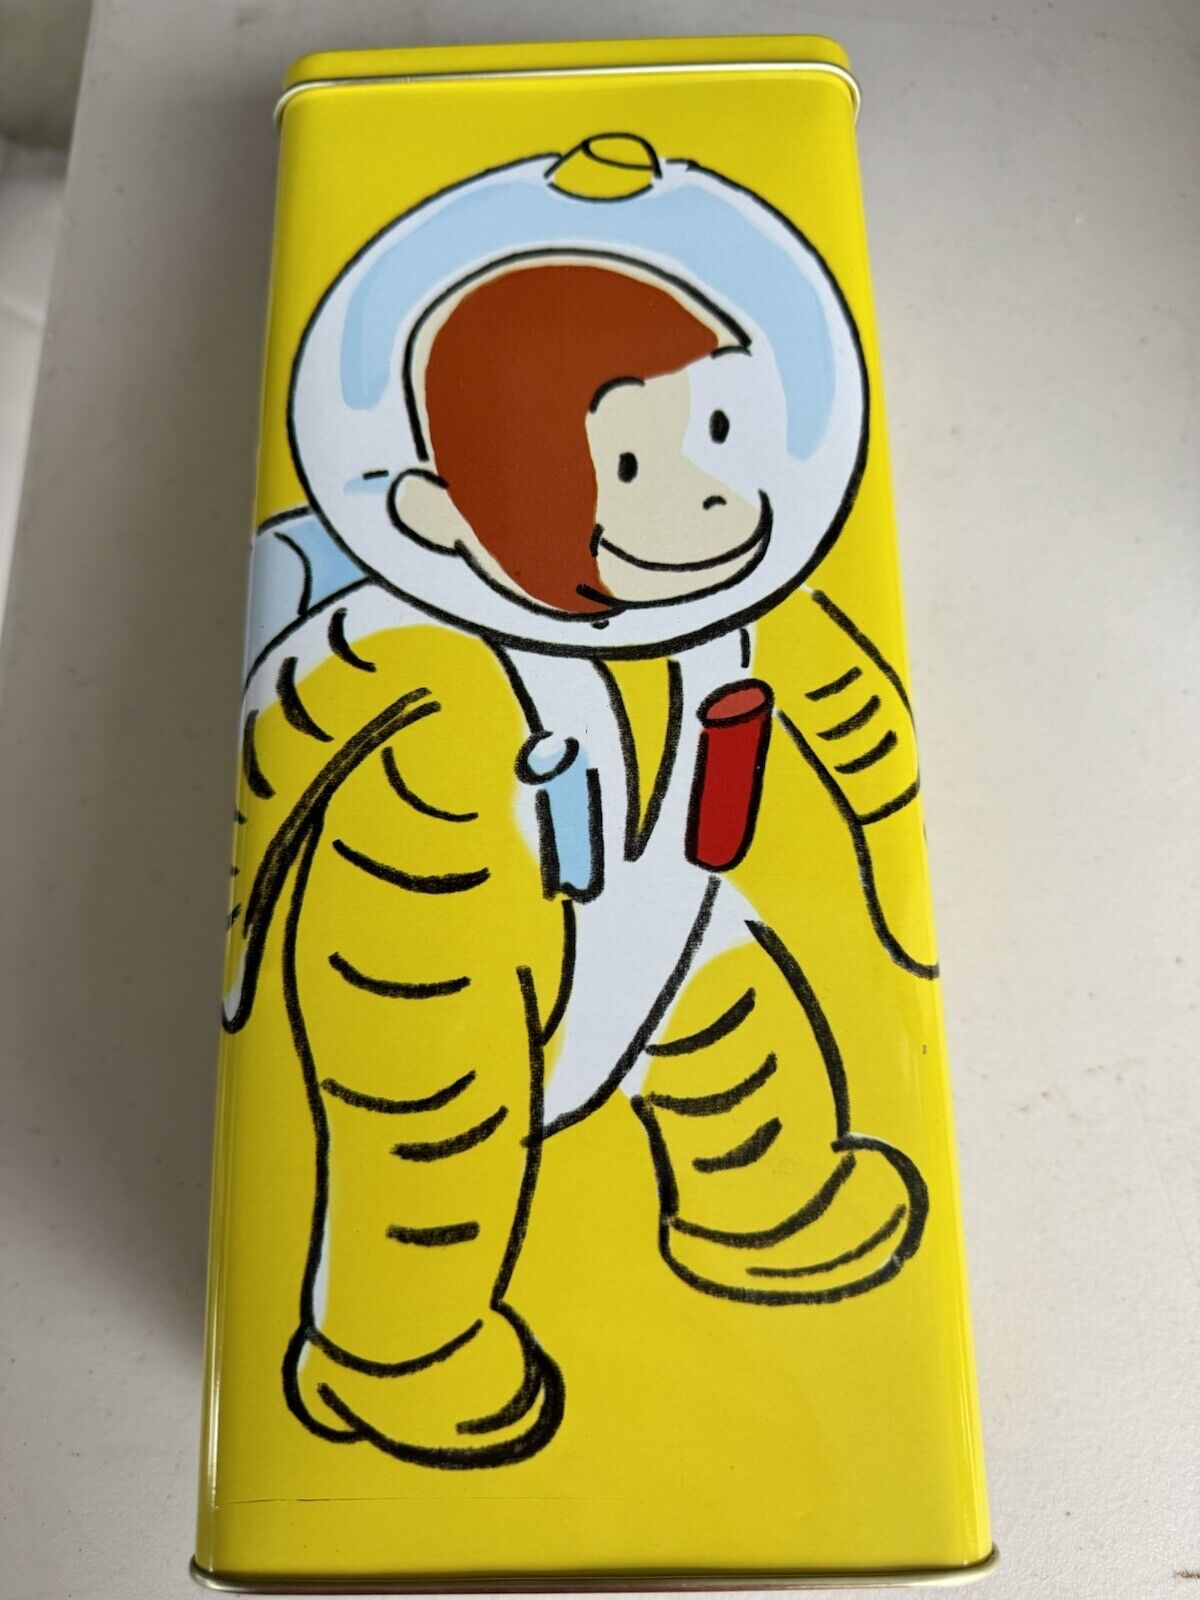 Vintage Curious George Astronaut Sealed Tin 1998 Series #1 Rectangle Bananas